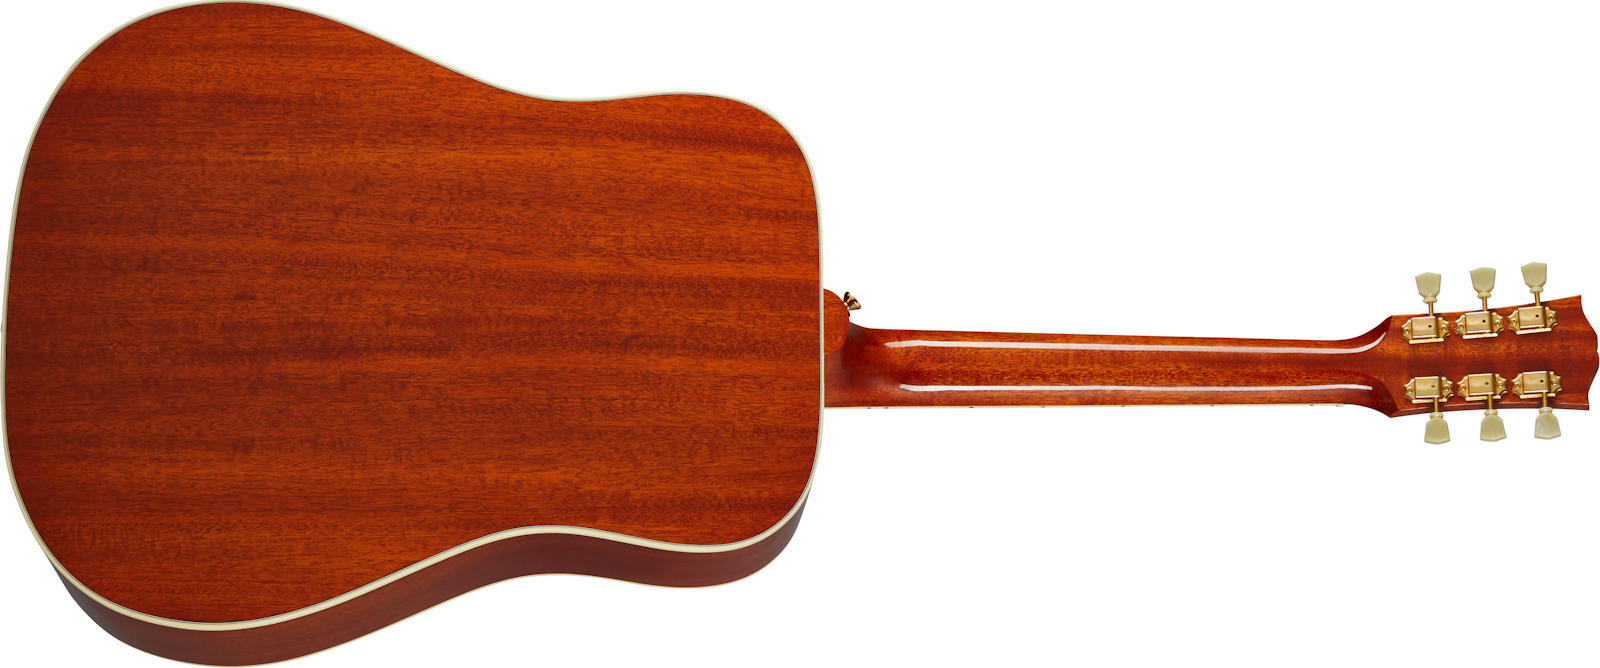 Gibson Hummingbird Original 2020 Dreadnought Epicea Acajou Rw - Heritage Cherry Sunburst - Elektroakustische Gitarre - Variation 1